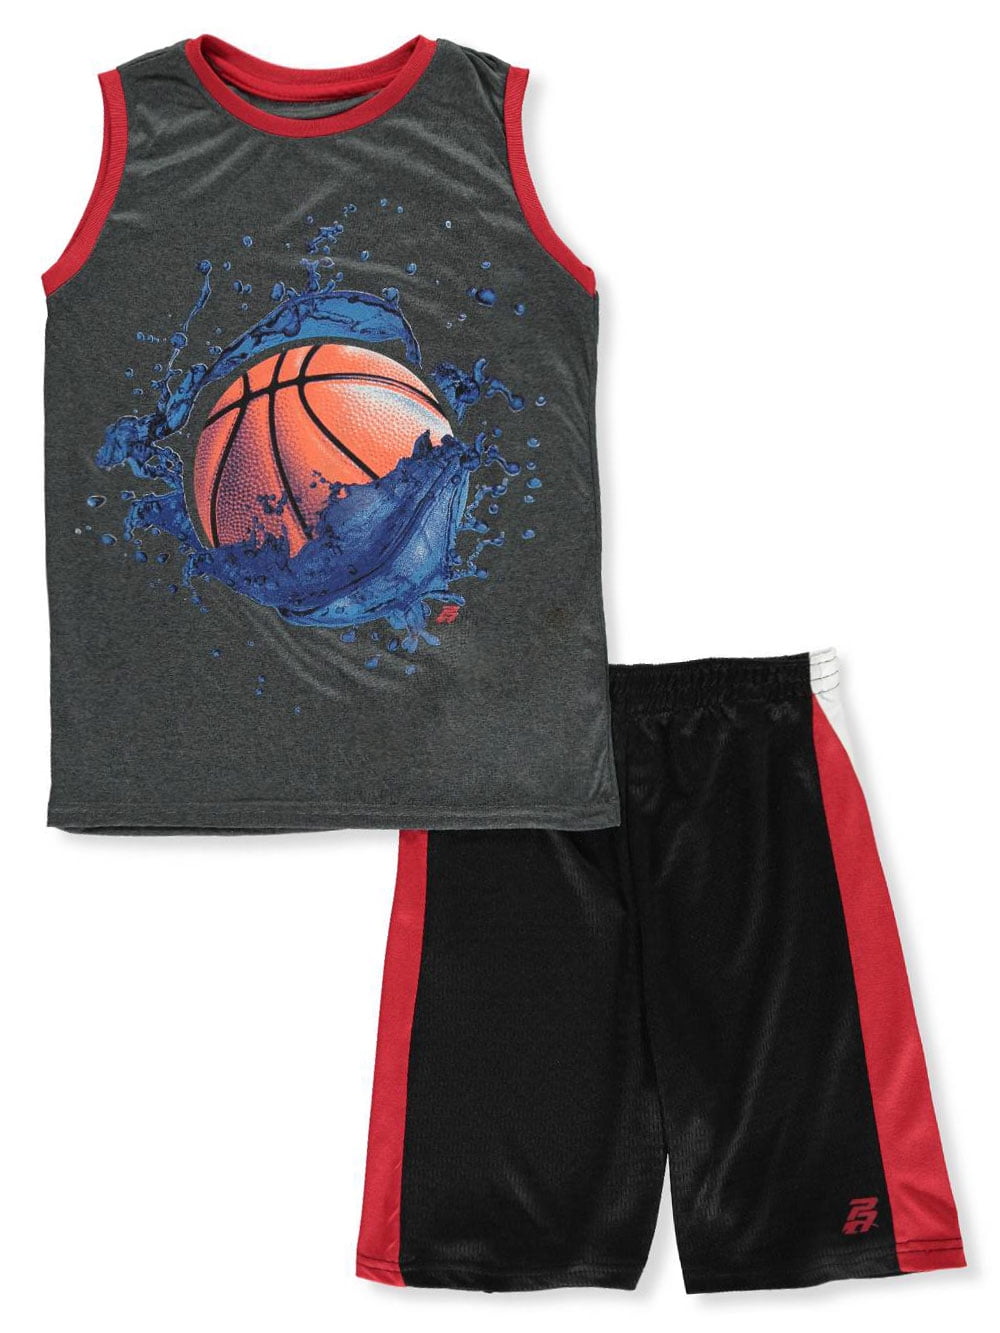 Pro Athlete Boys Basketball 2-Piece Shorts Set Outfit